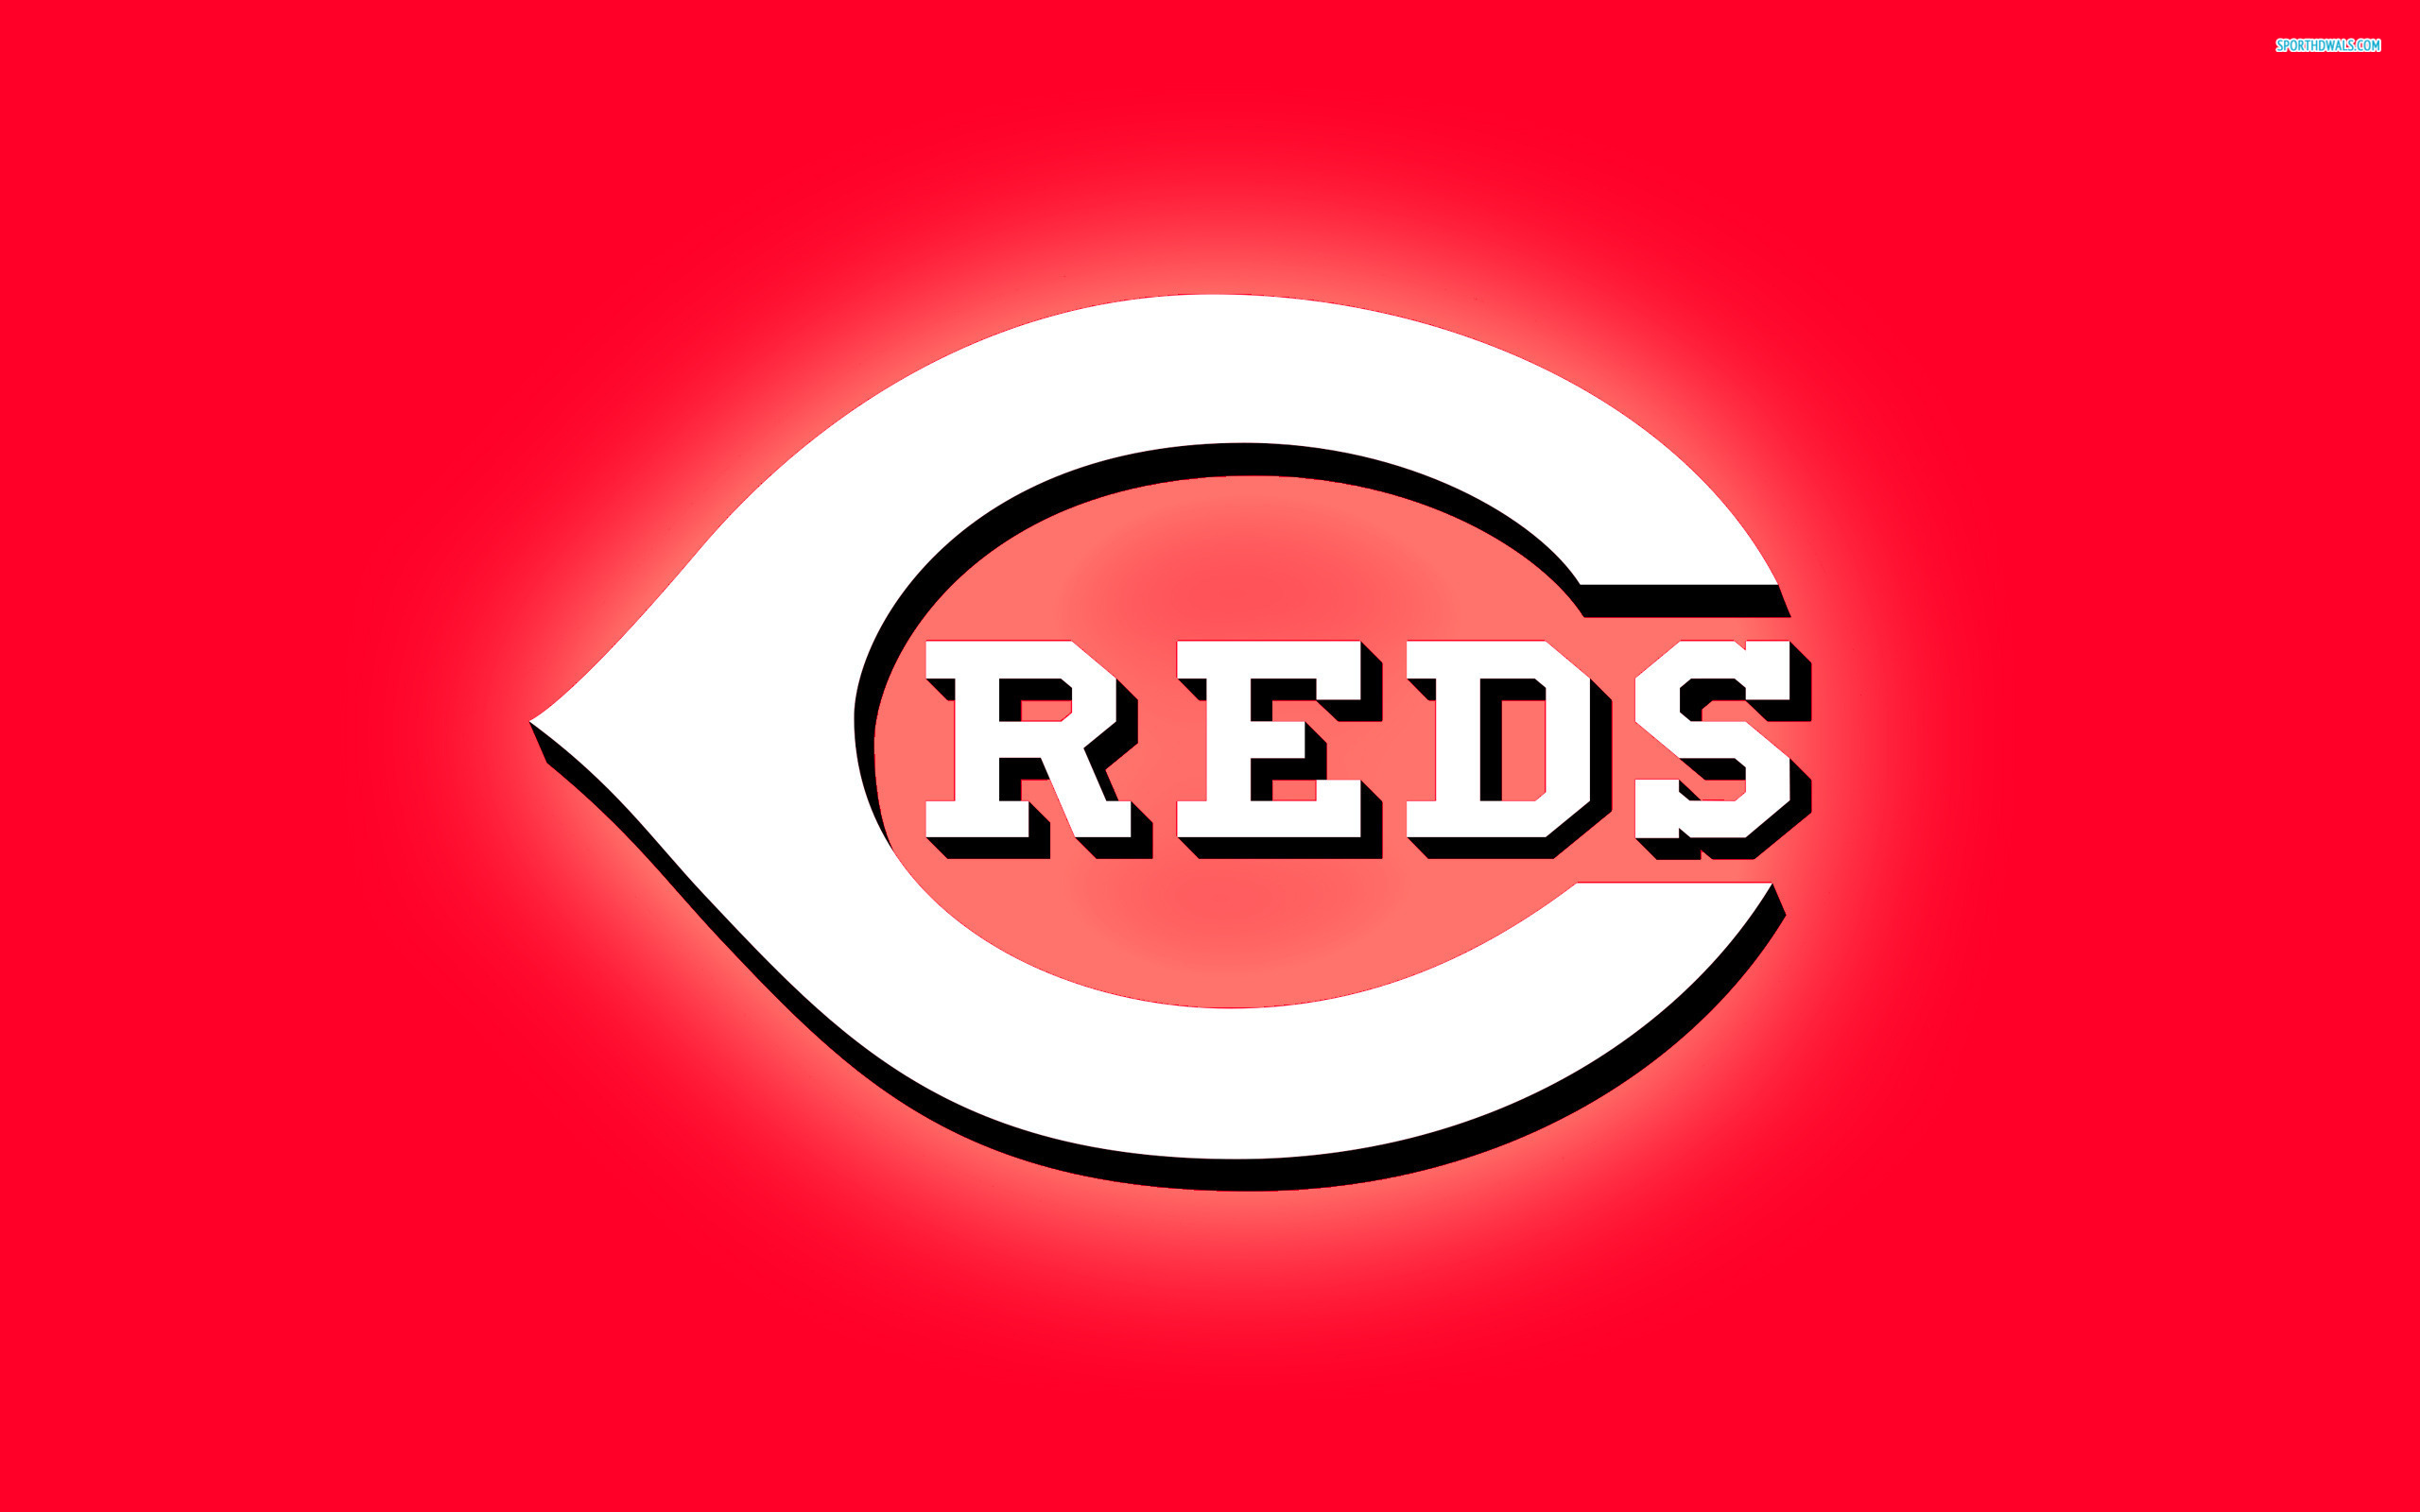 Cincinnati Reds Mlb Baseball Wallpaper Background